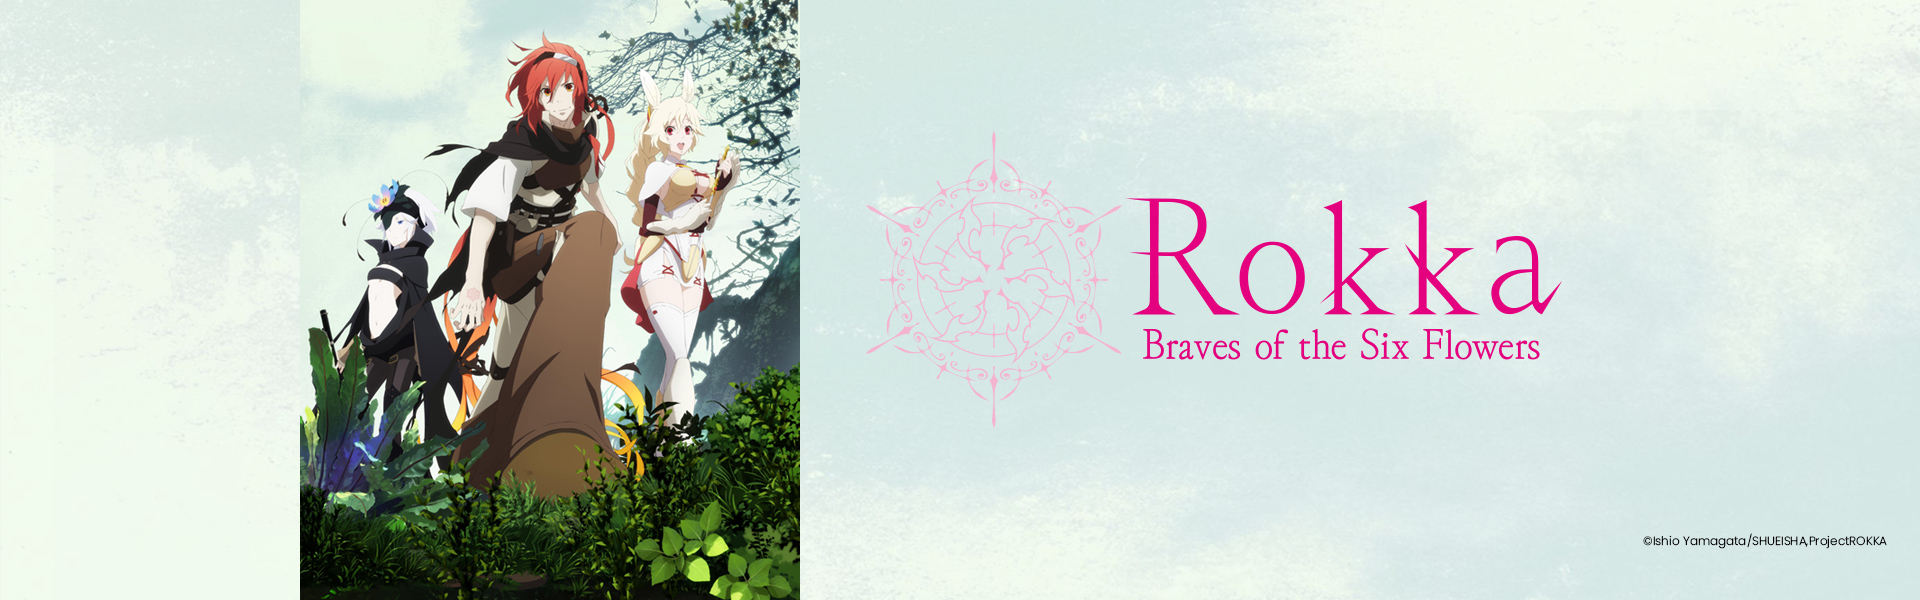 Rokka -Braves of the Six Flowers-